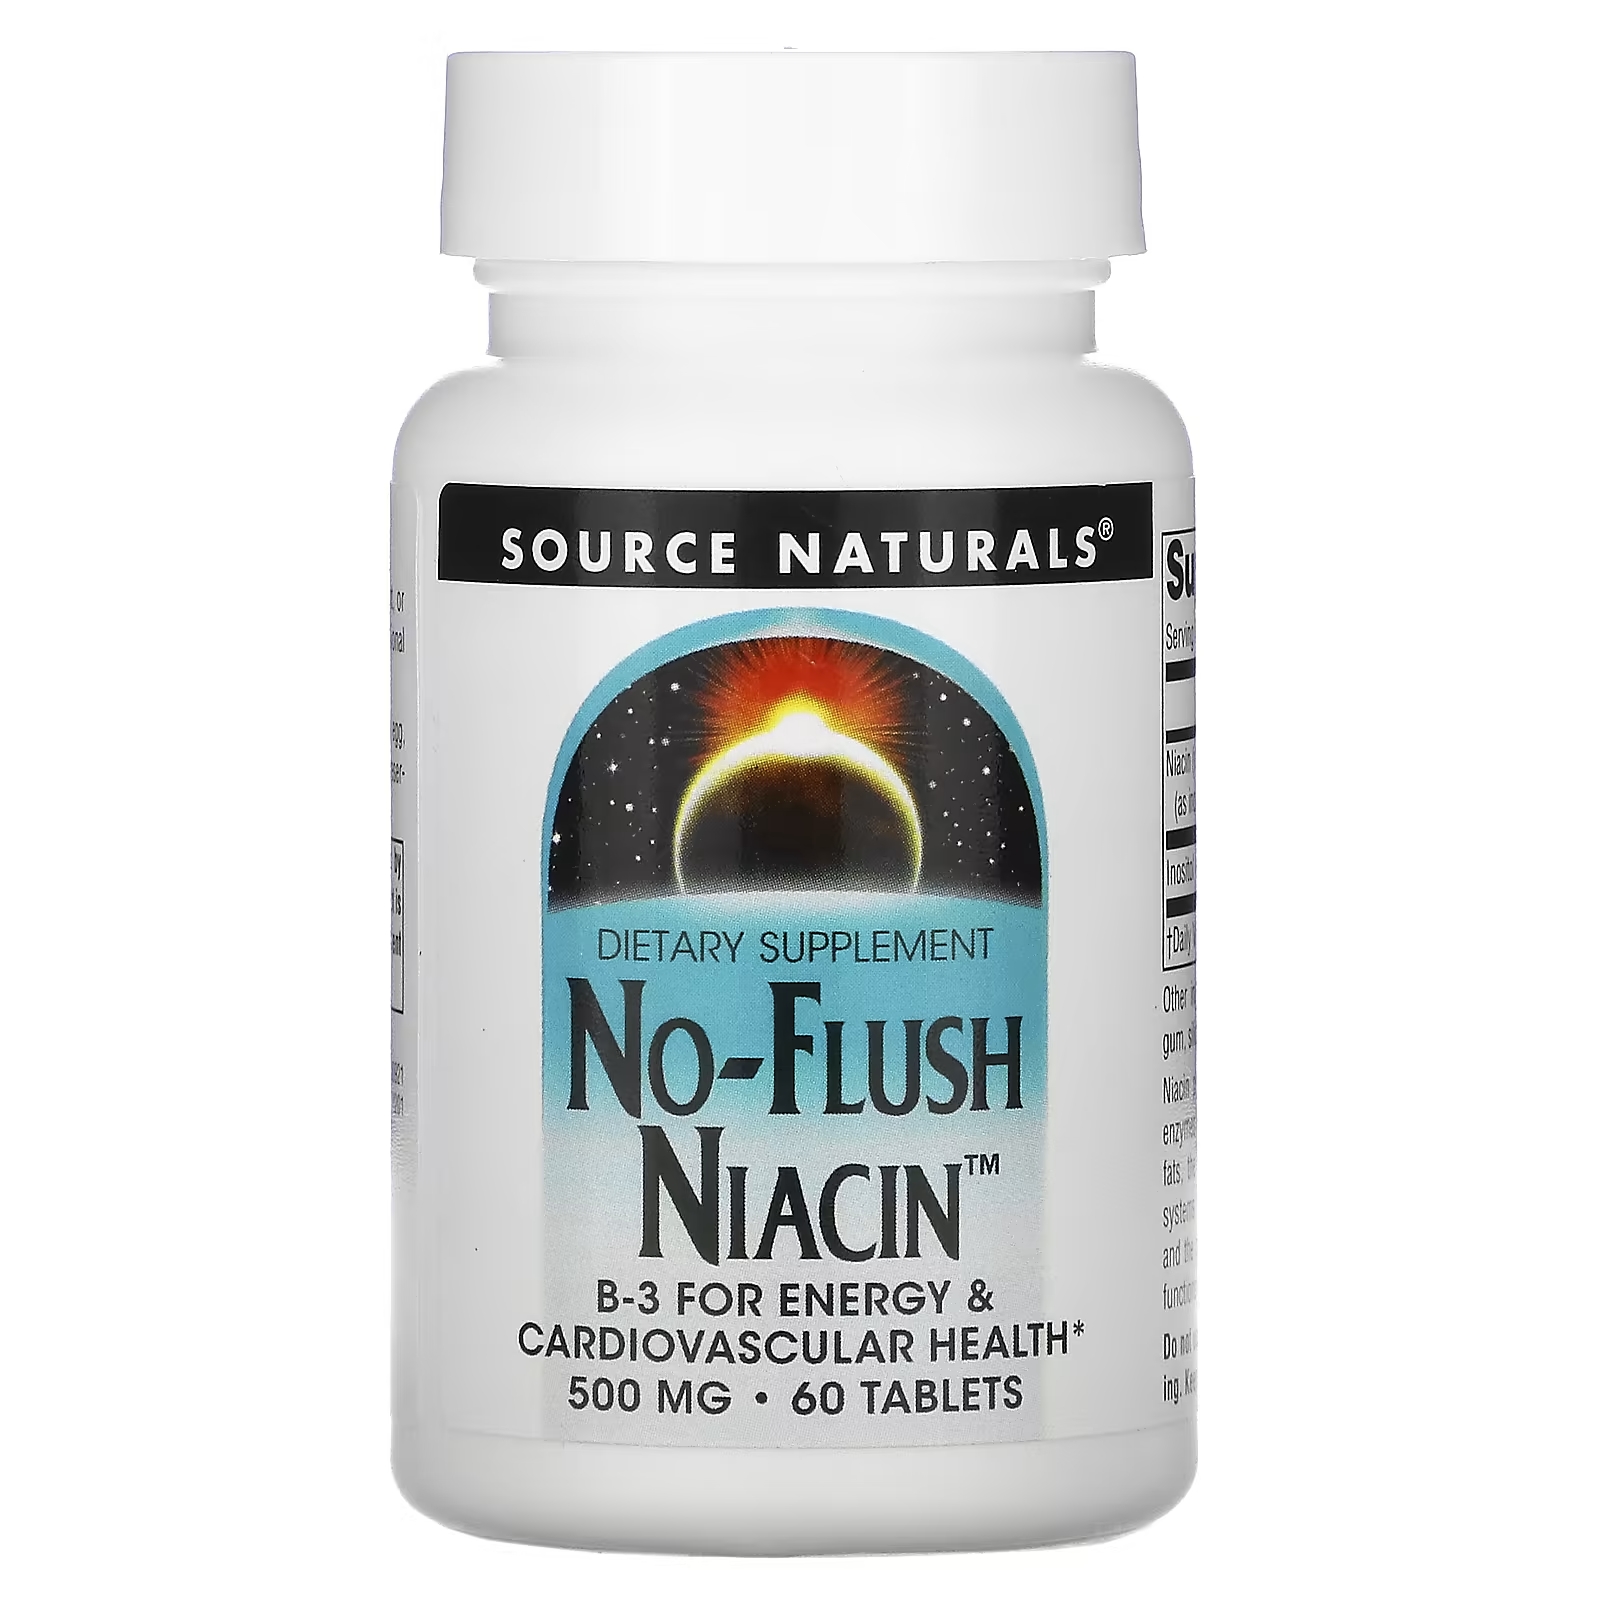 Source Naturals ниацин не вызывает приливов крови 500 мг, 60 таблеток цена и фото